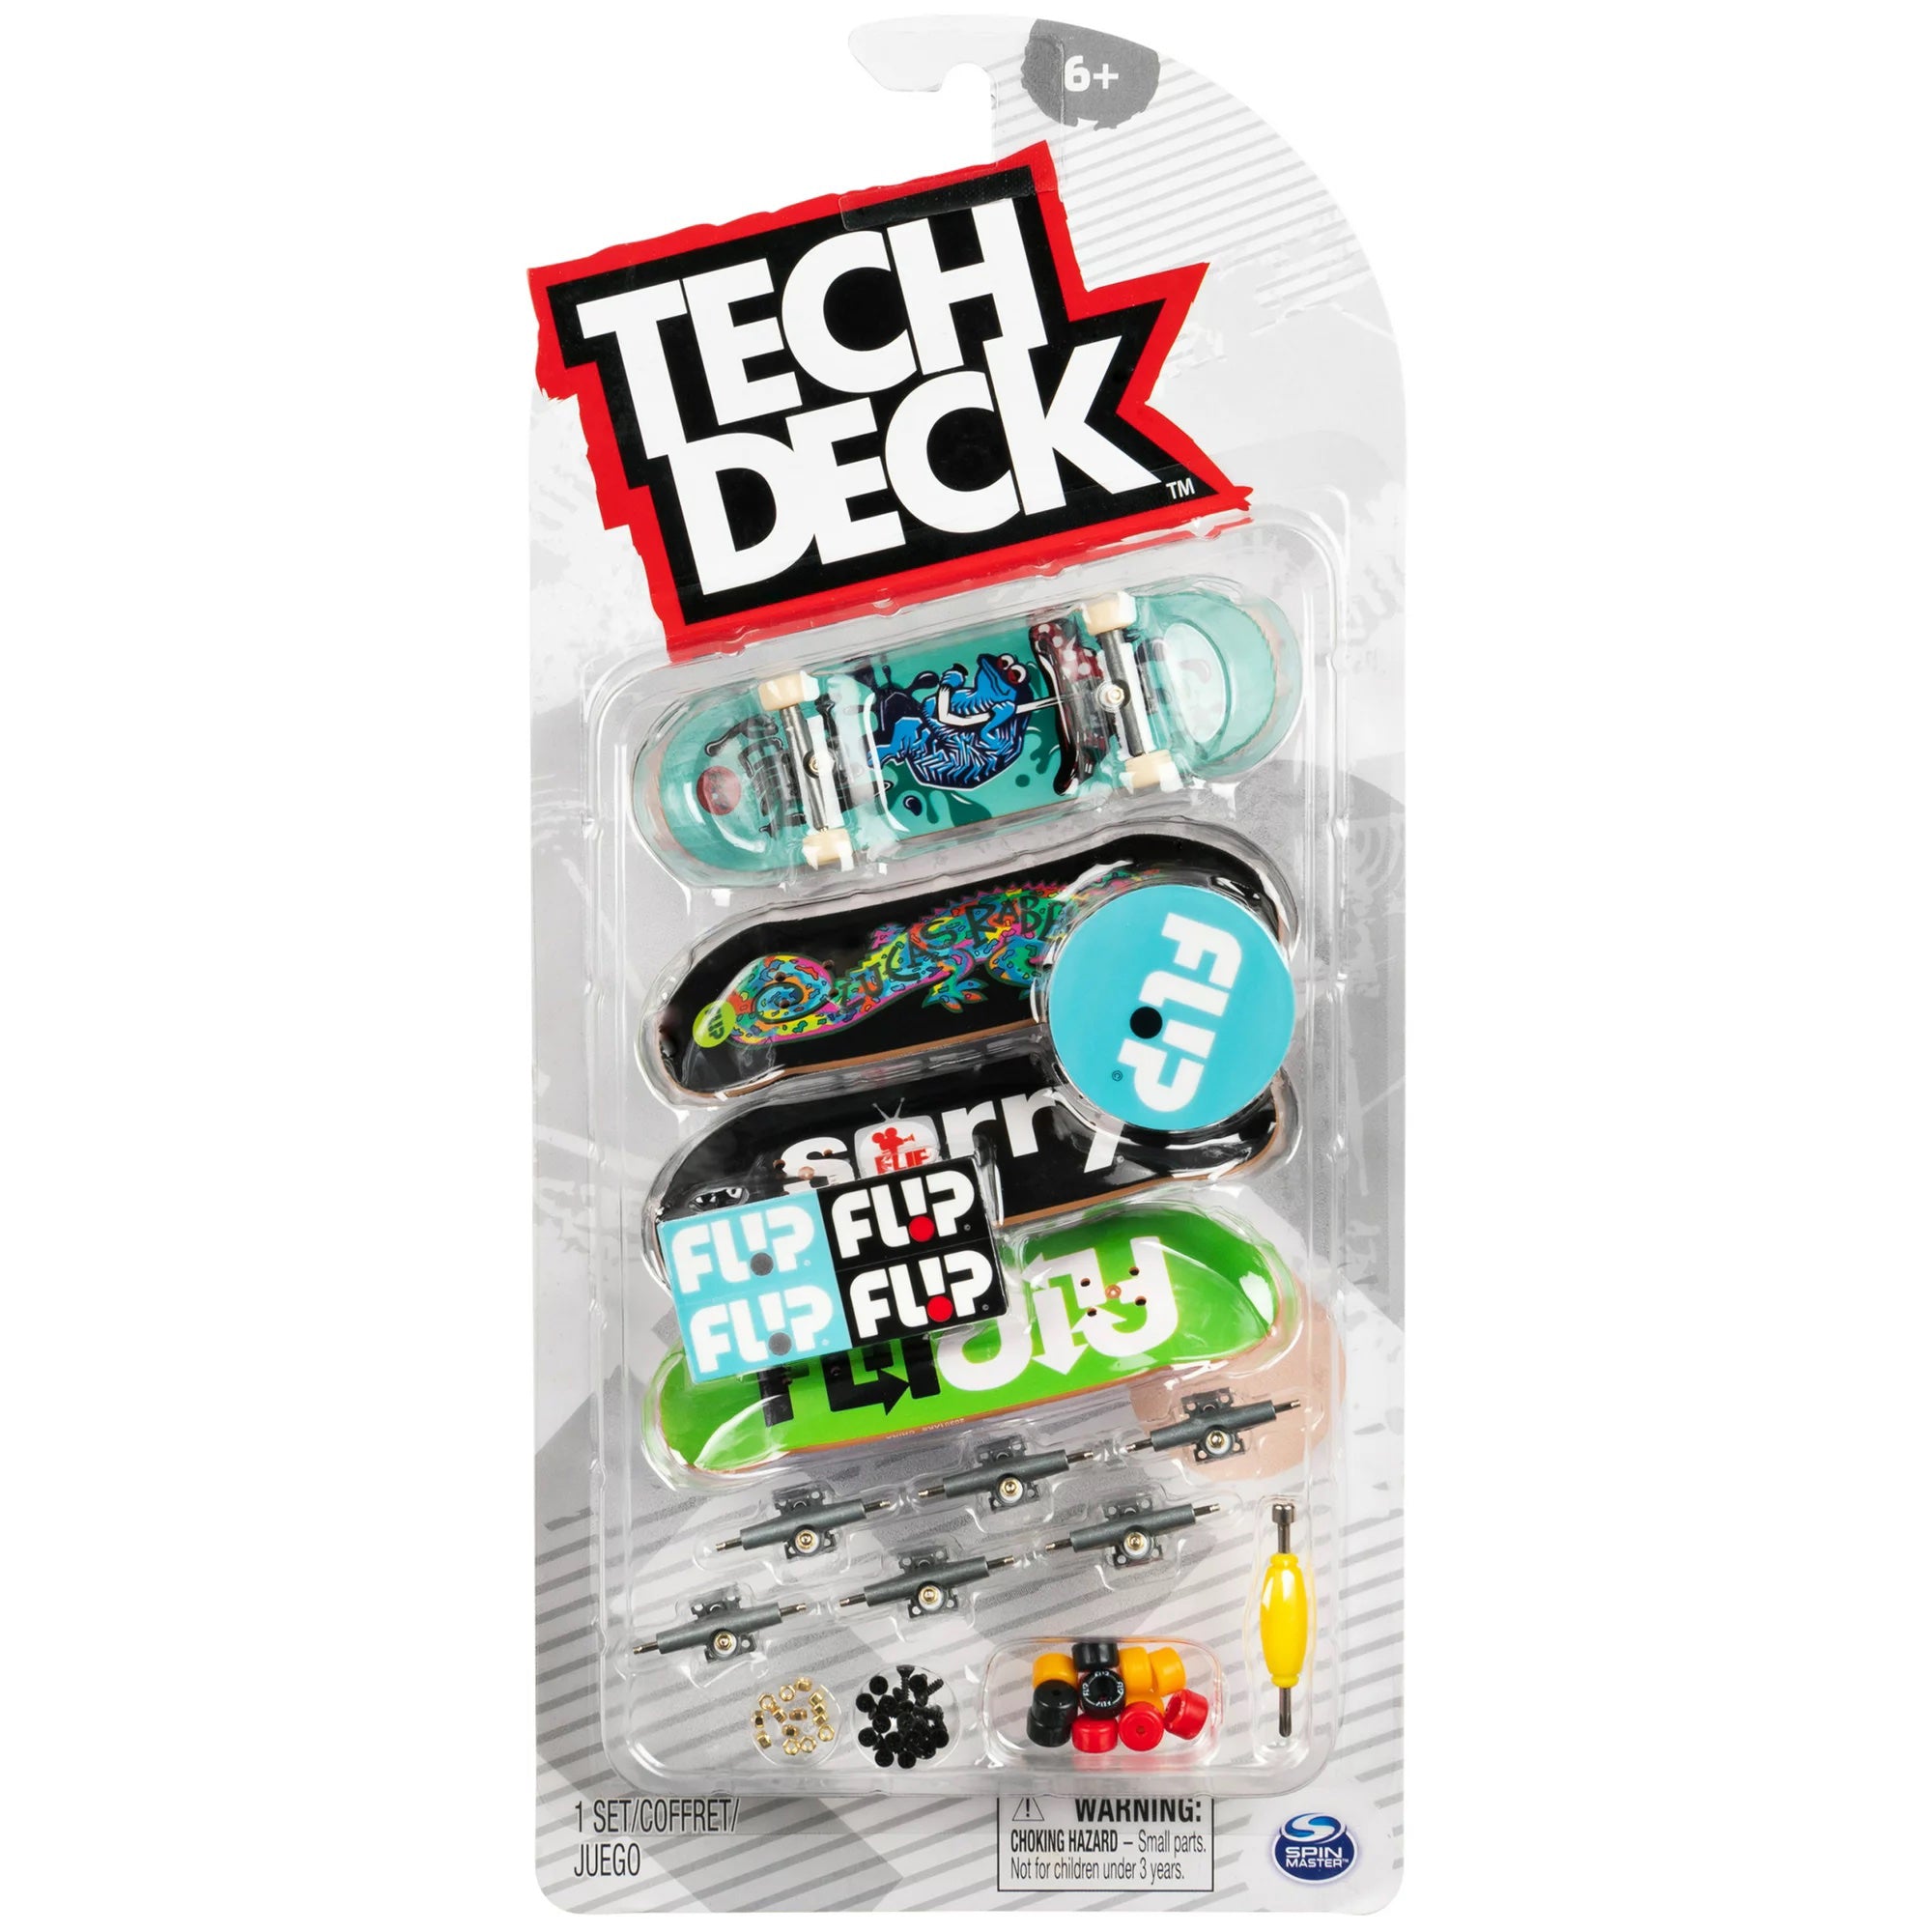 Tech Deck DLX 4-Pack Fingerboards